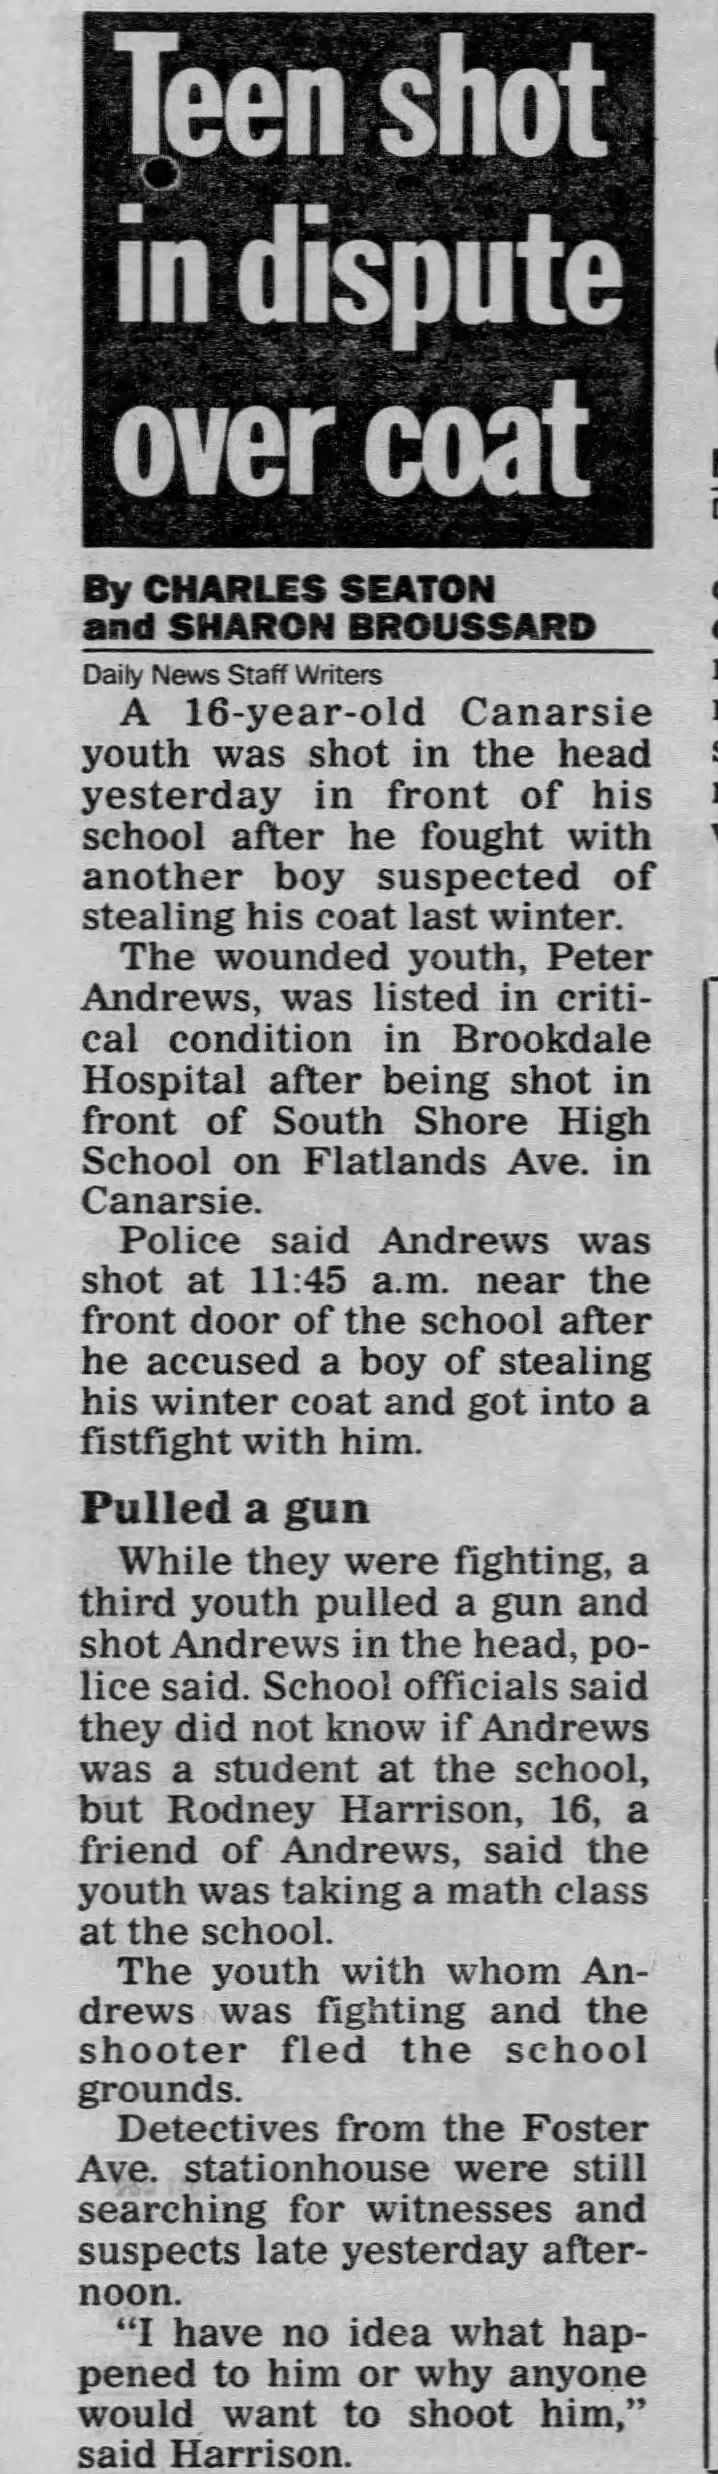 Charles Seaton & Sharon Broussard, "Teen shot in dispute over coat," Daily News, 7/11/90,KSI1